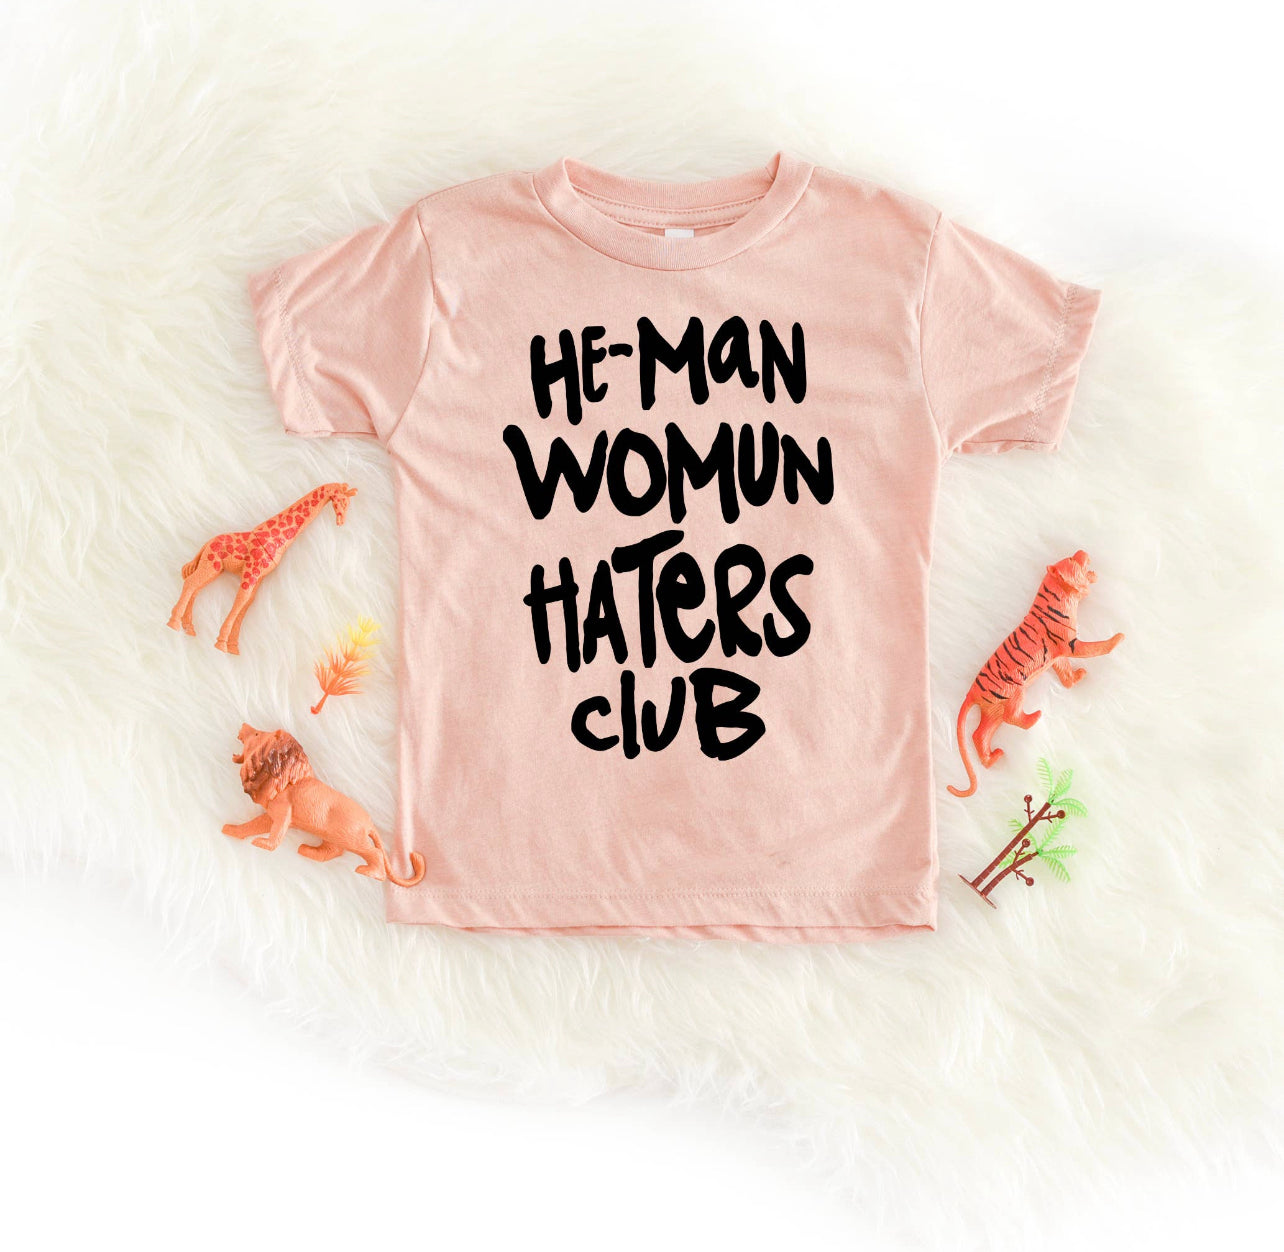 He-Man woman haters club kids tee